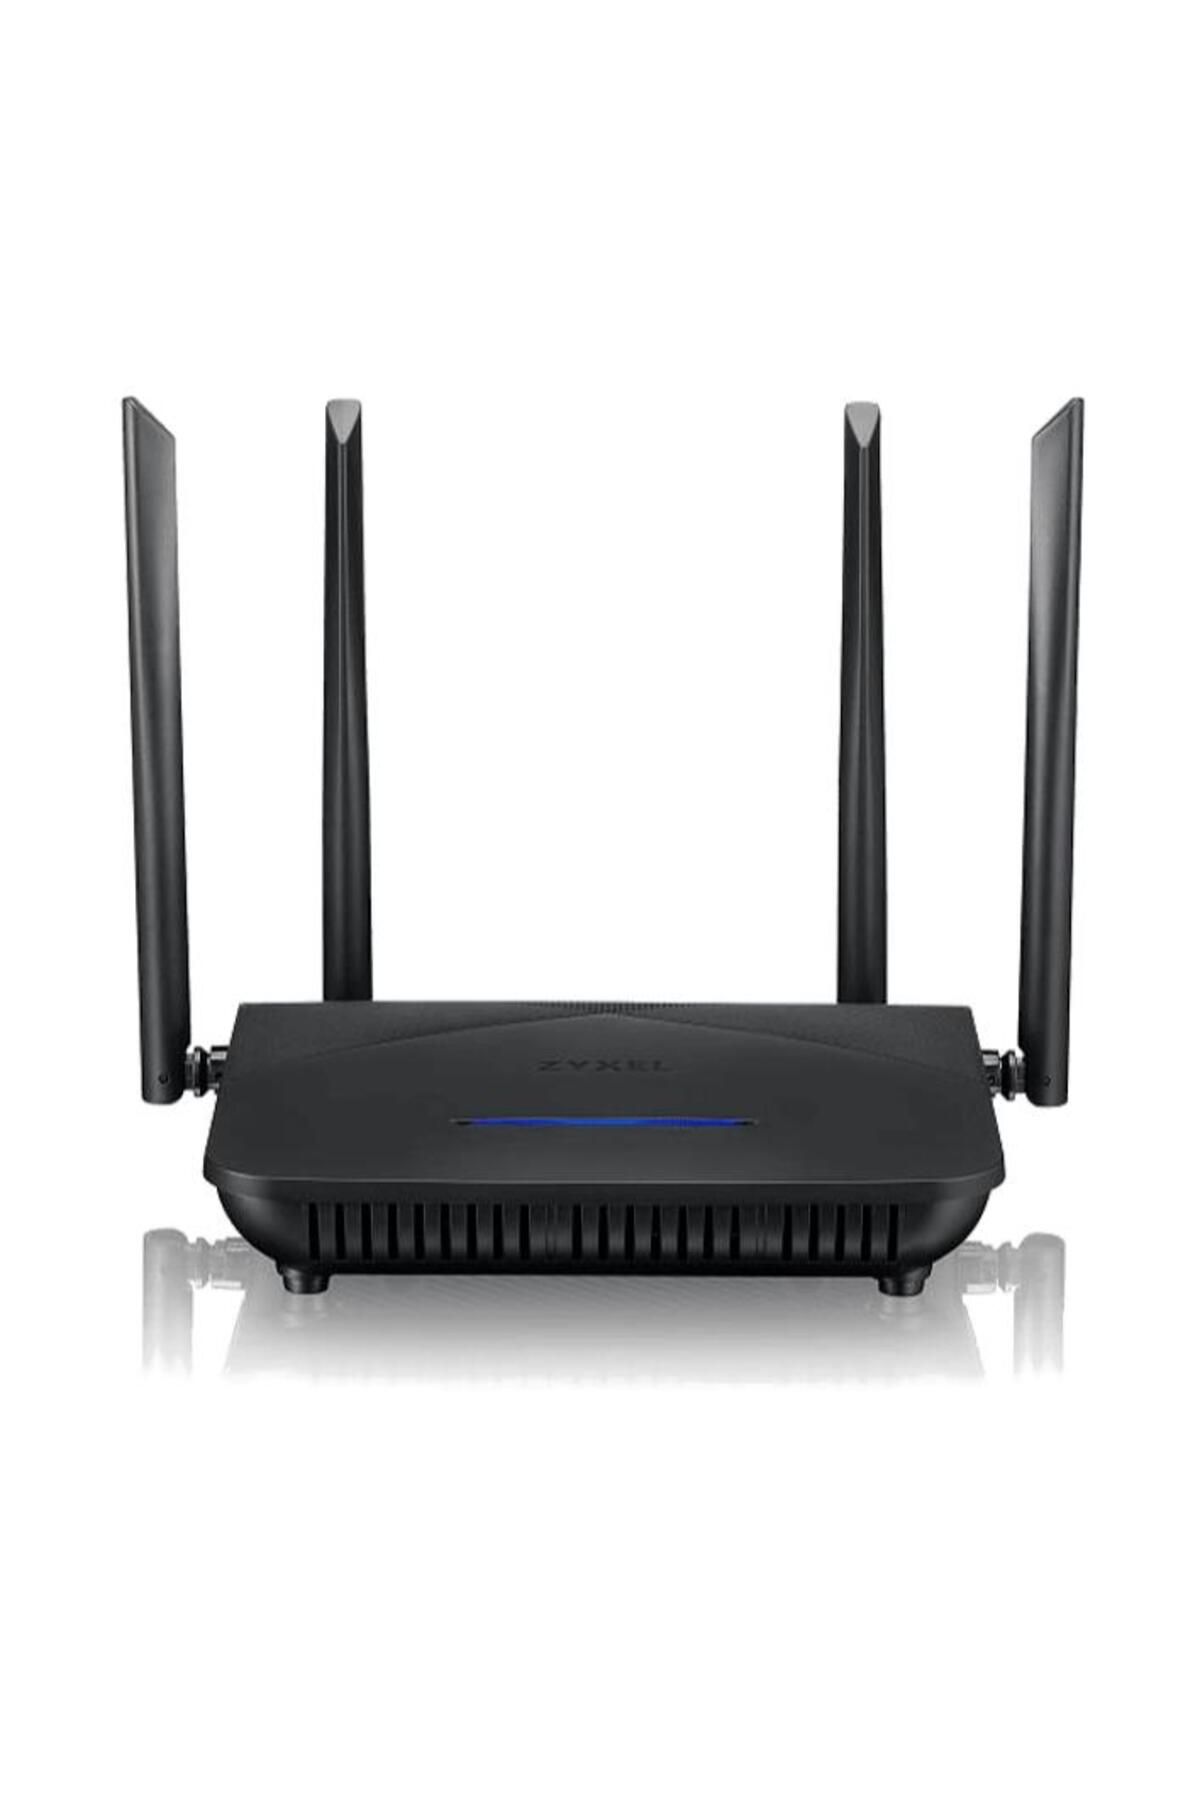 Zyxel Nbg-7510 574mbps-1201mbps Dual-bant Wi-fi 6 Router